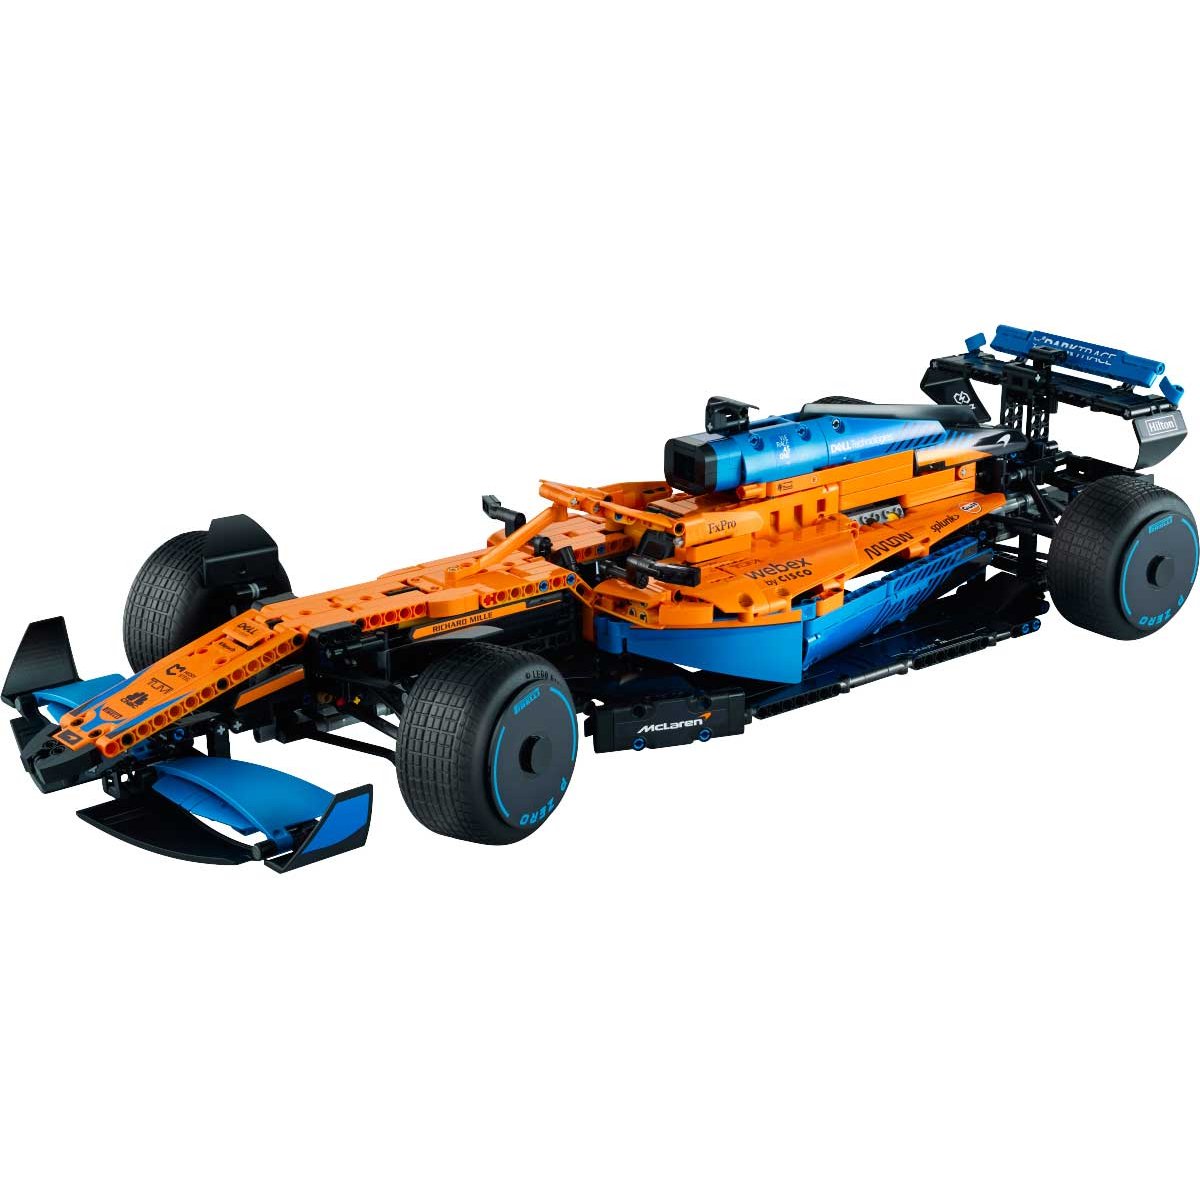 Auto de Carreras Mclaren Formula 1 Lego Technic